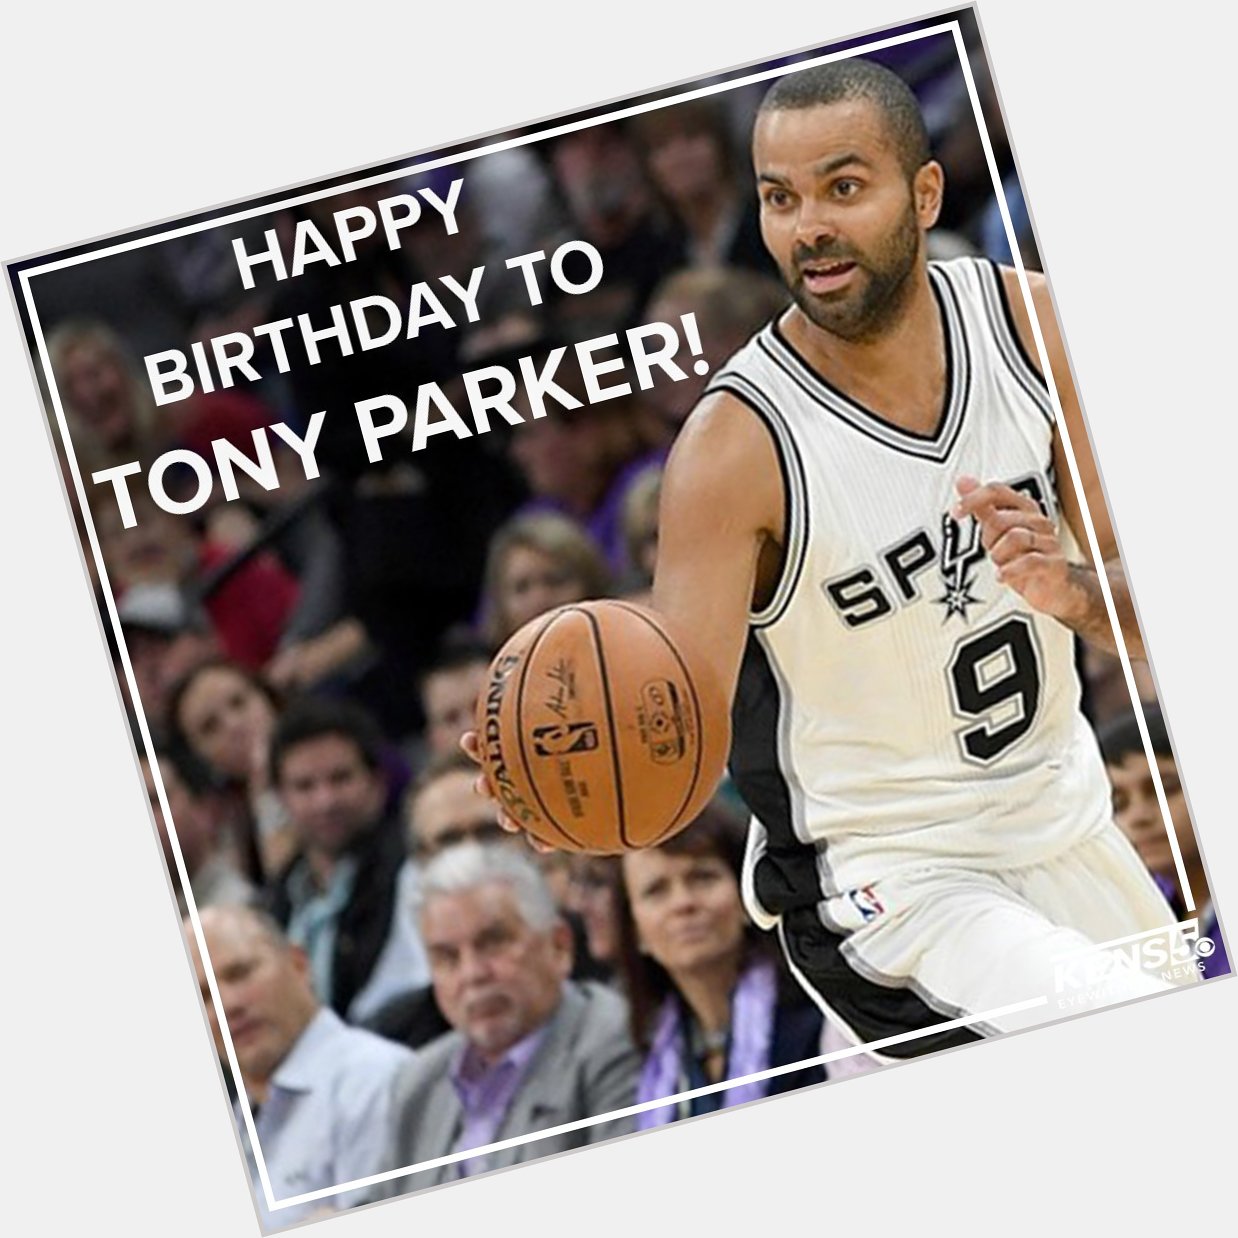 HAPPY BIRTHDAY, TONY PARKER!  From all of us in the Alamo City 